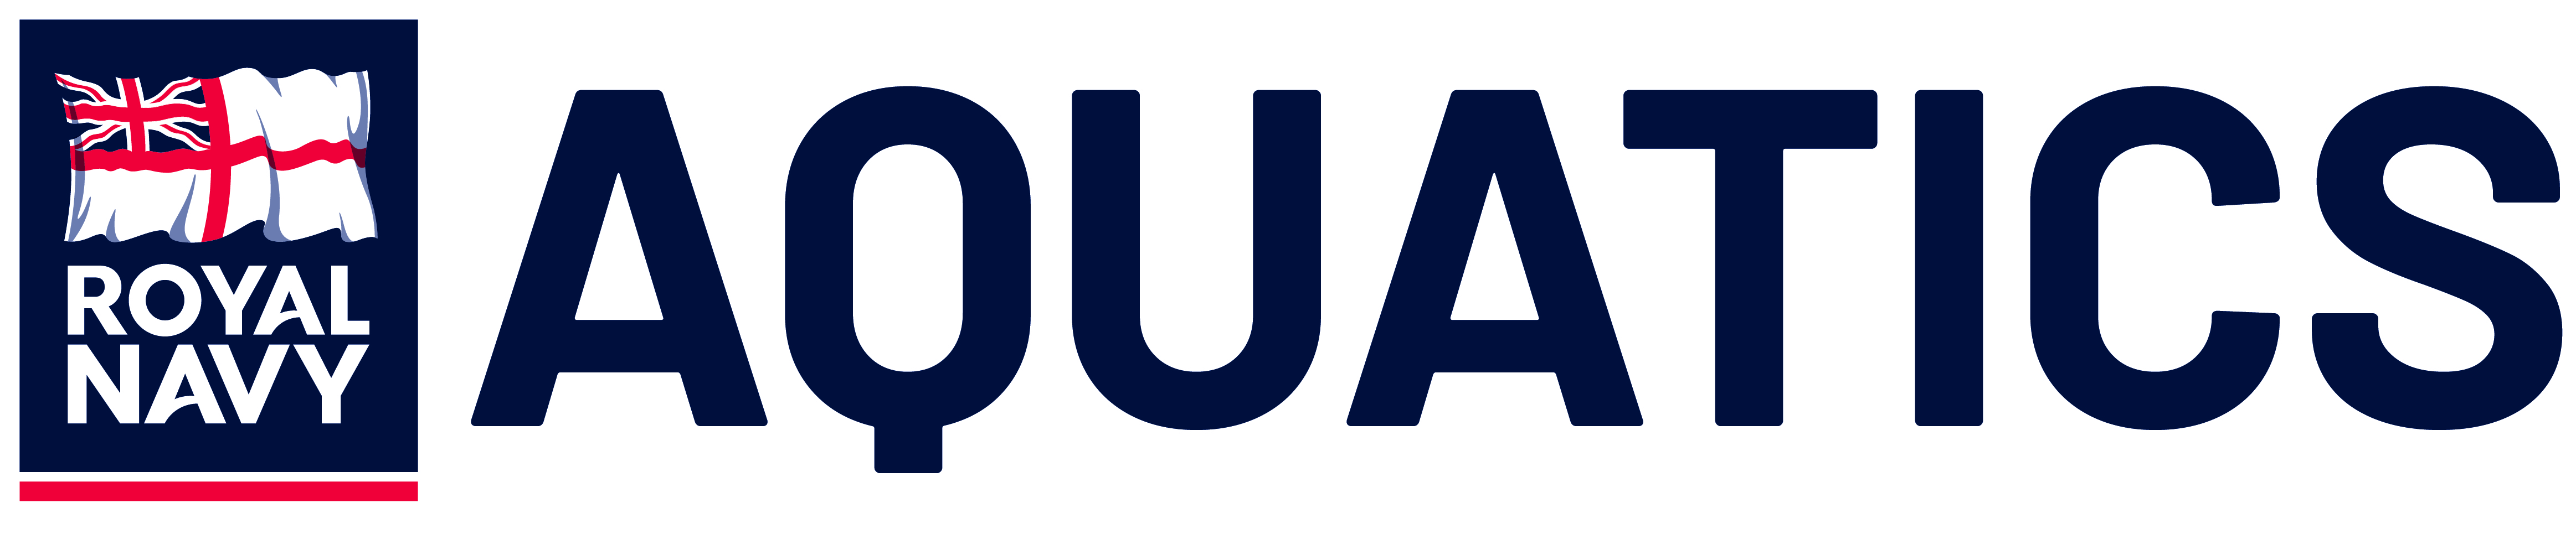 Royal Navy Aquatics Association